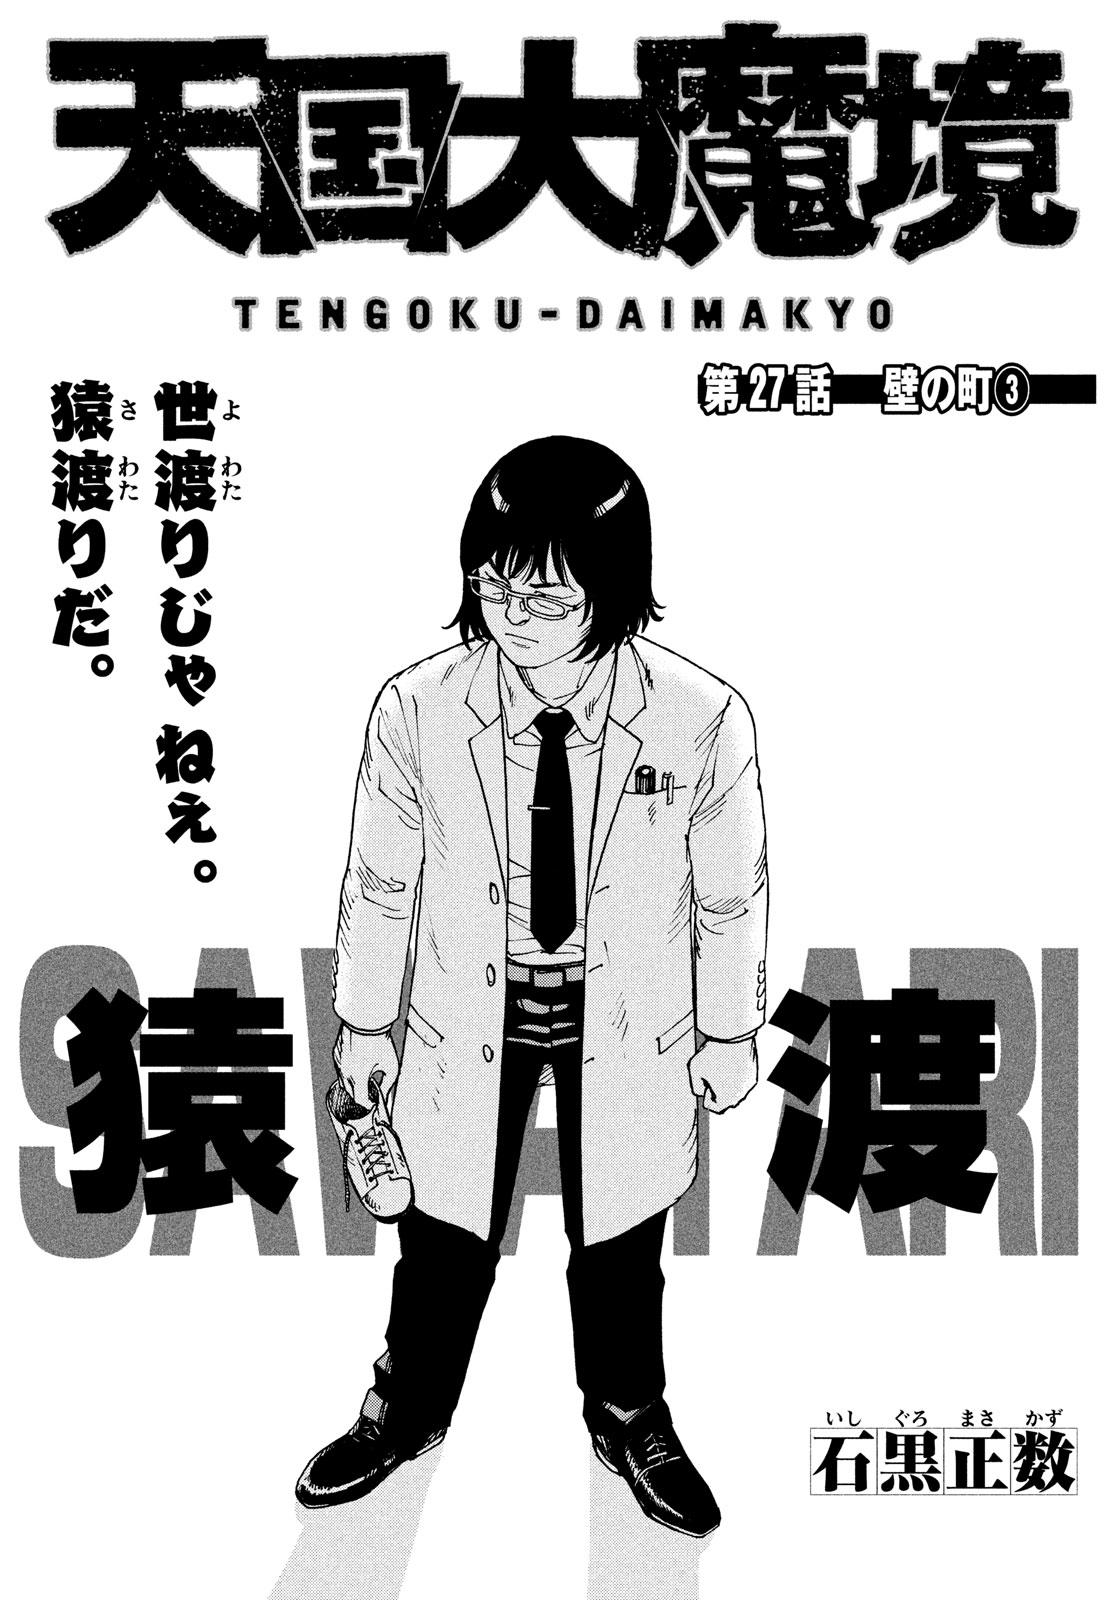 Read Tengoku Daimakyou Vol.1 Chapter 7: Tomato Heaven - Mangadex